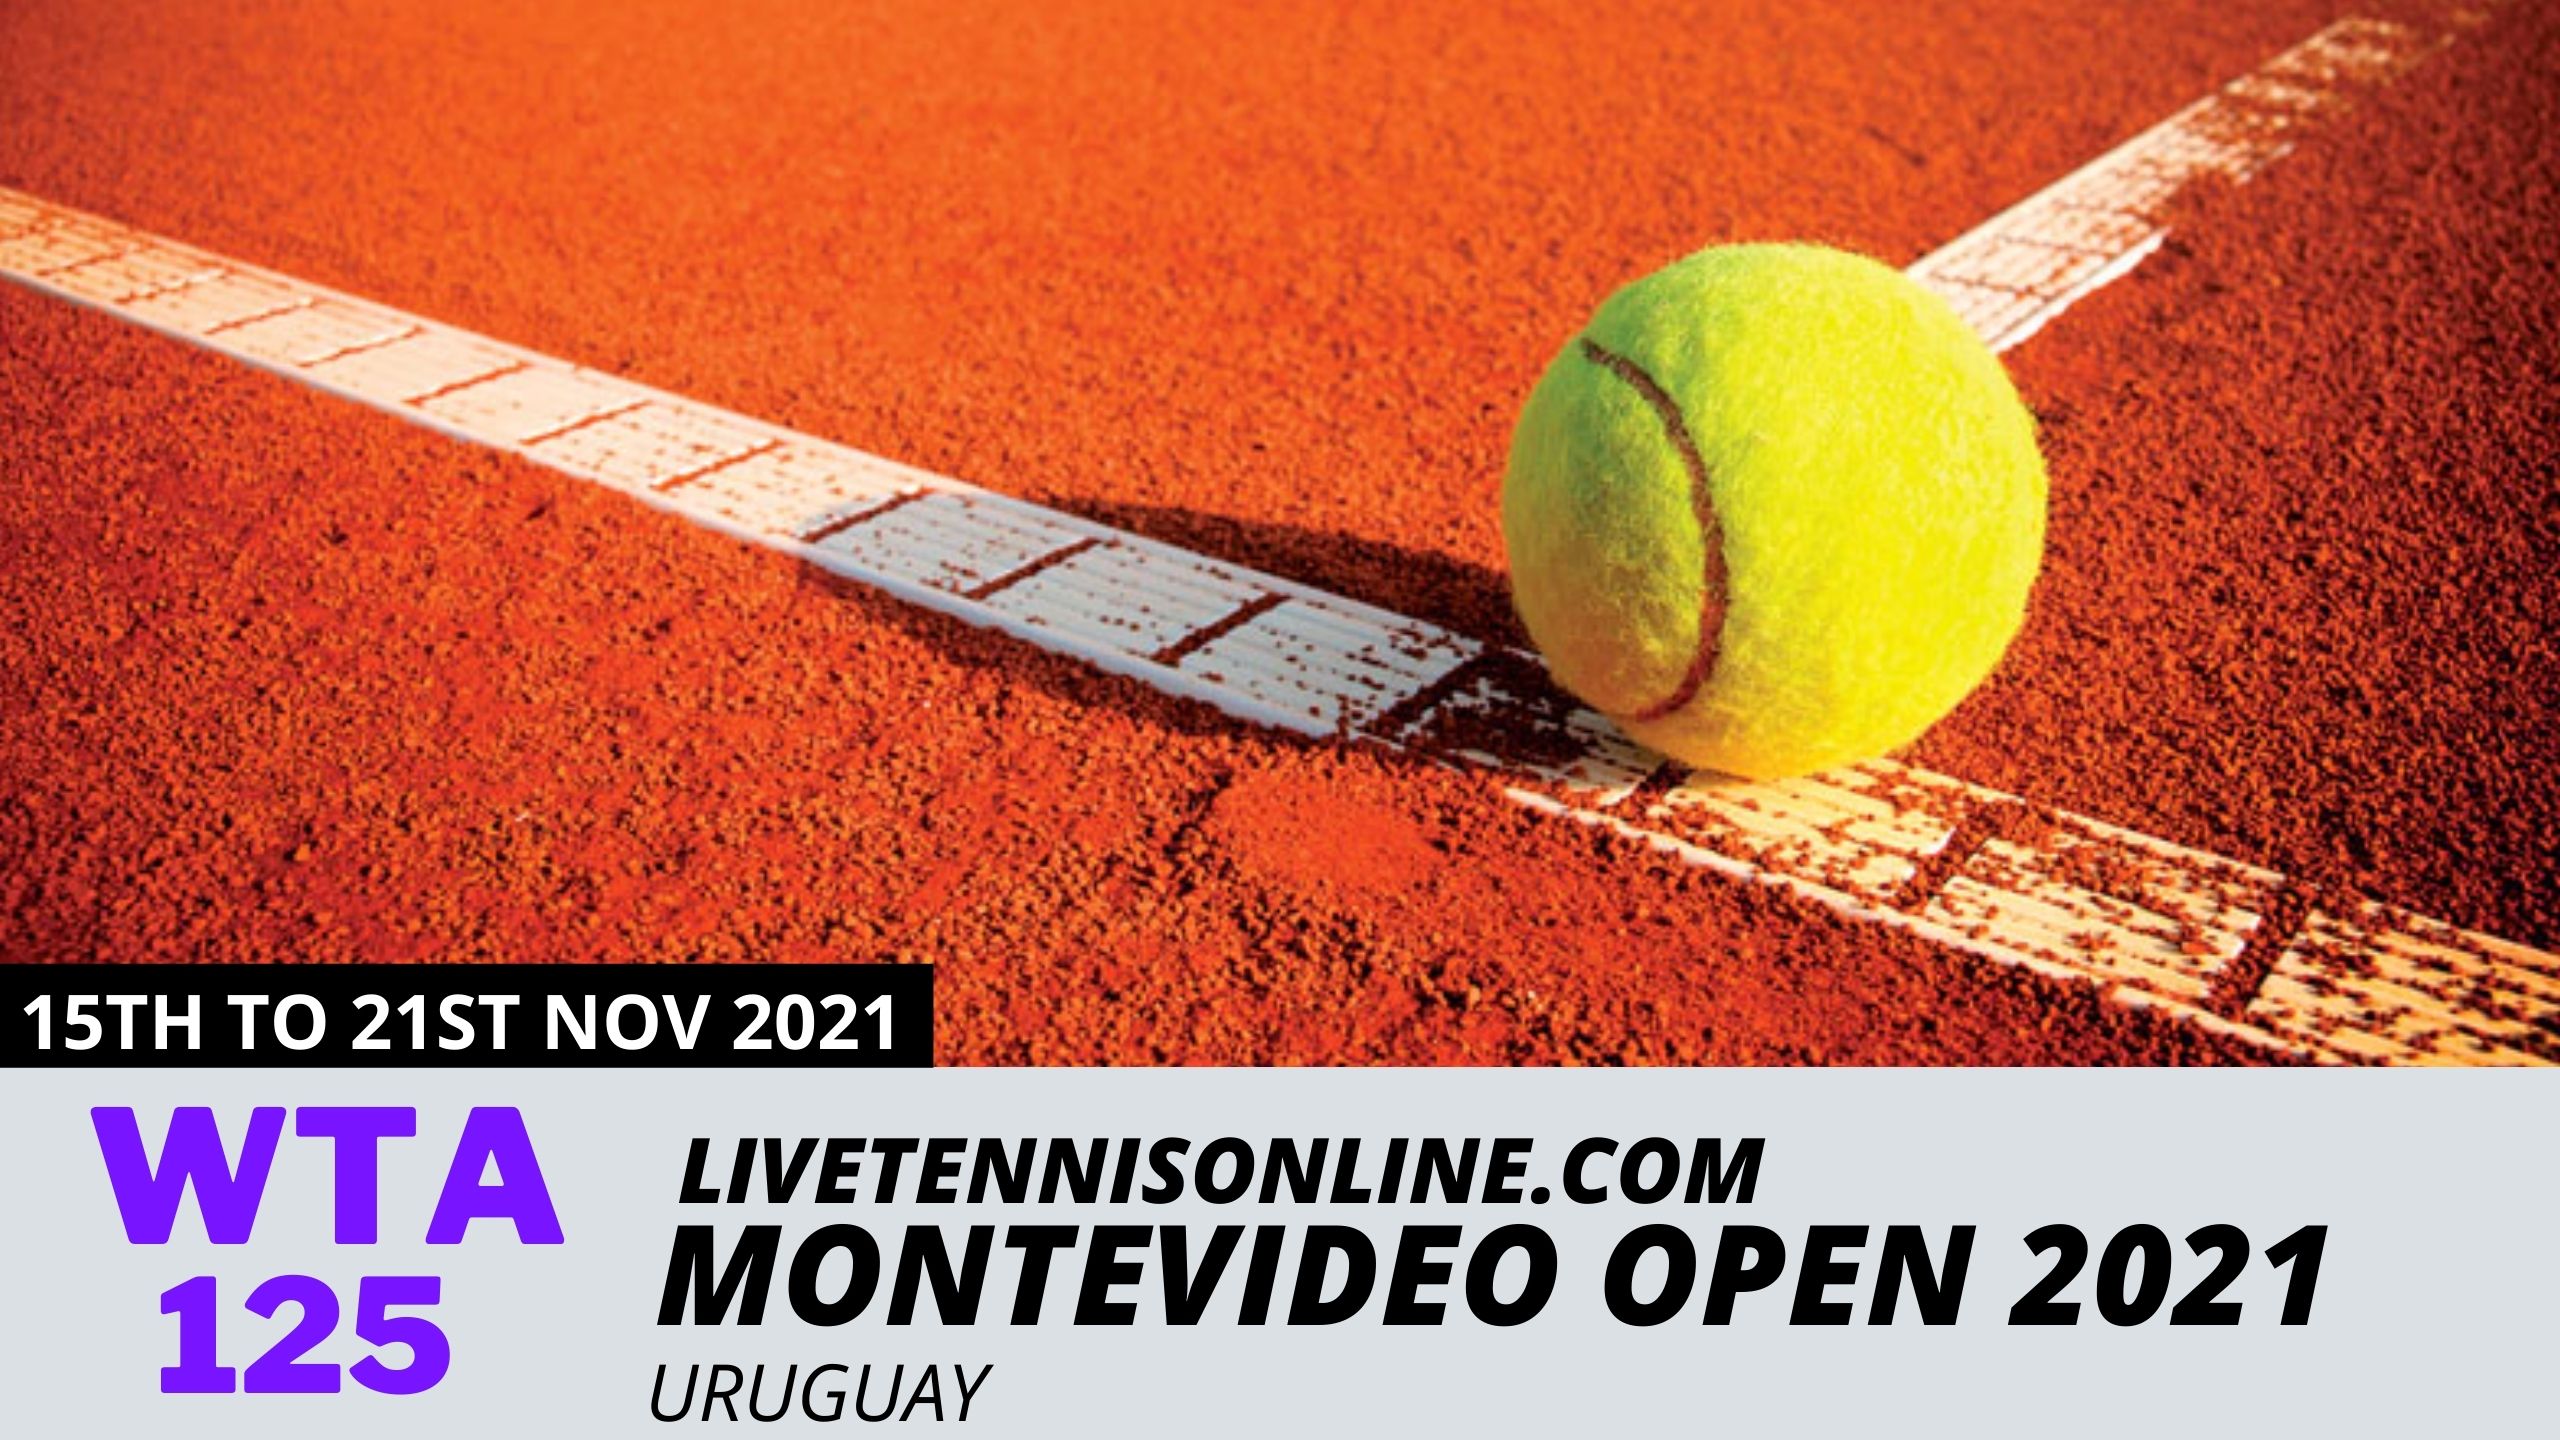 Montevideo Open Tennis Live Stream